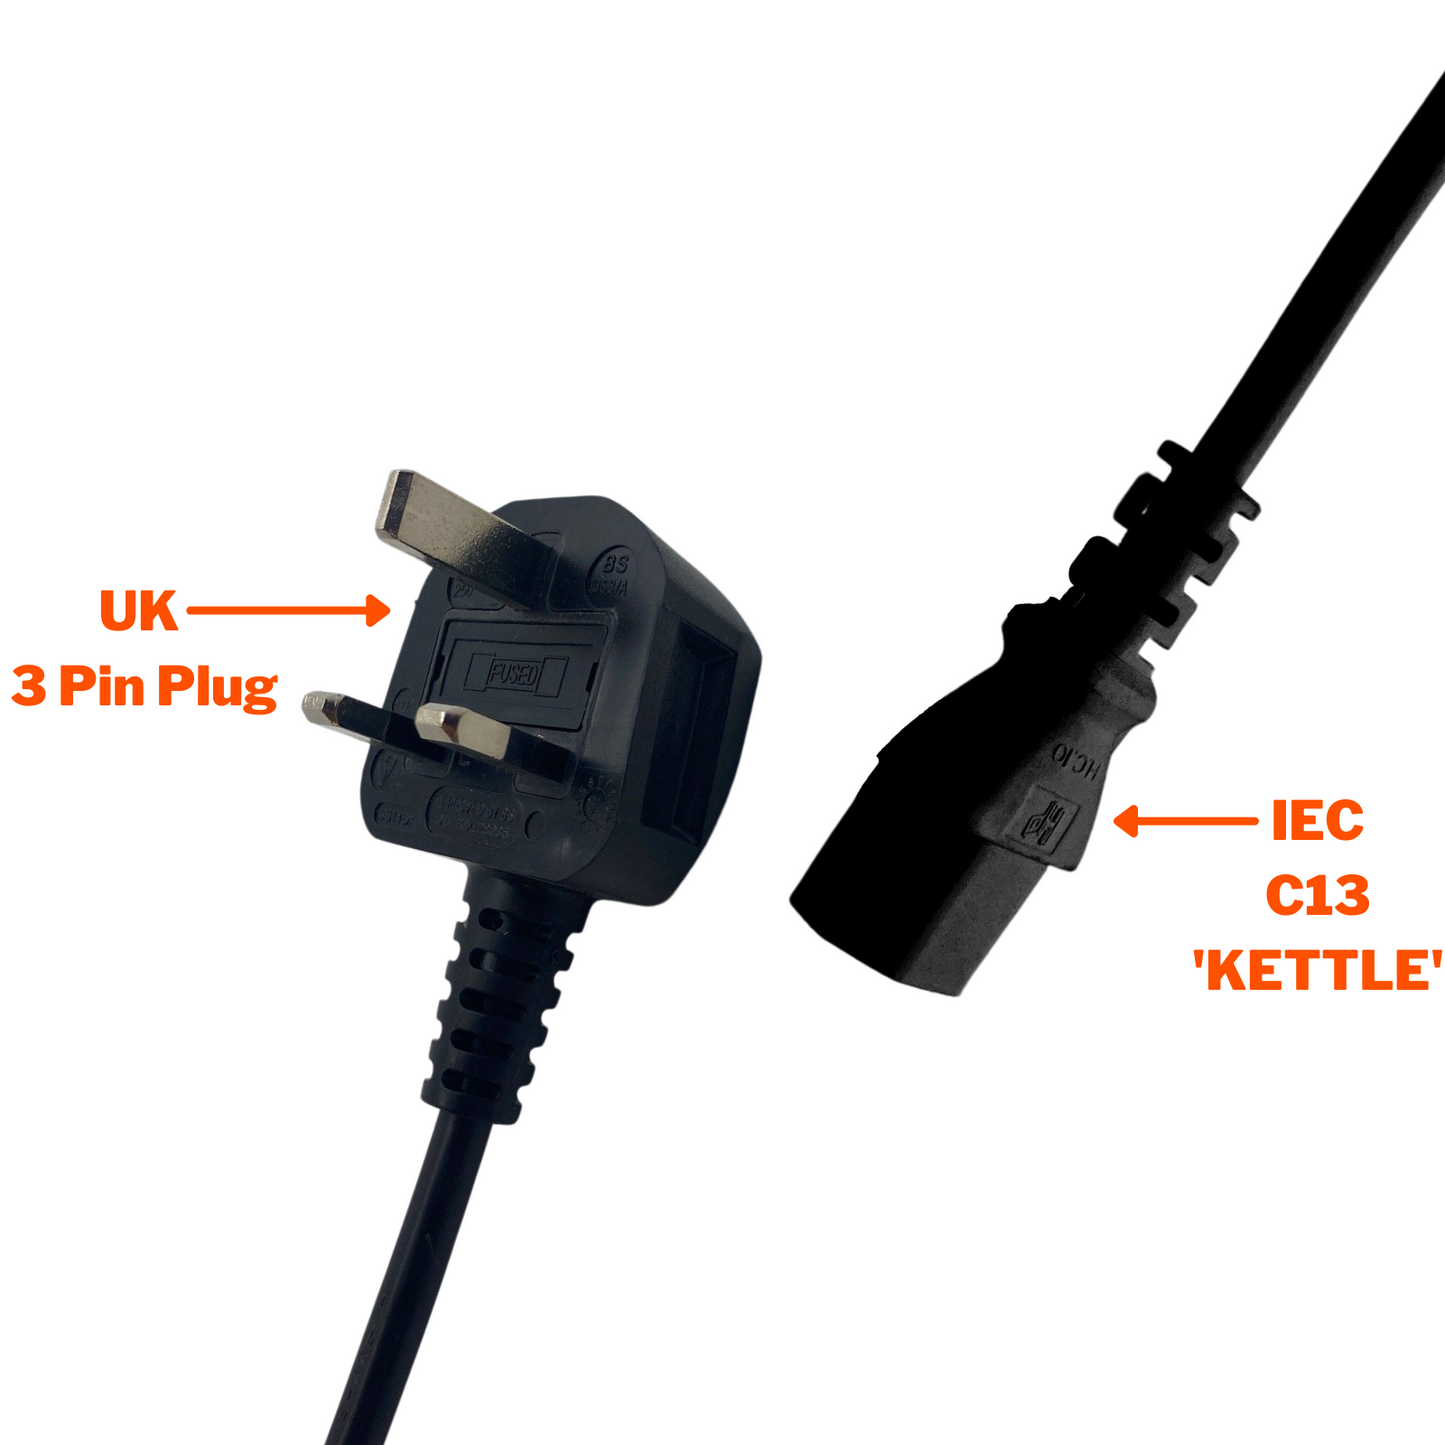 IEC C13 Straight Mains Lead - Black